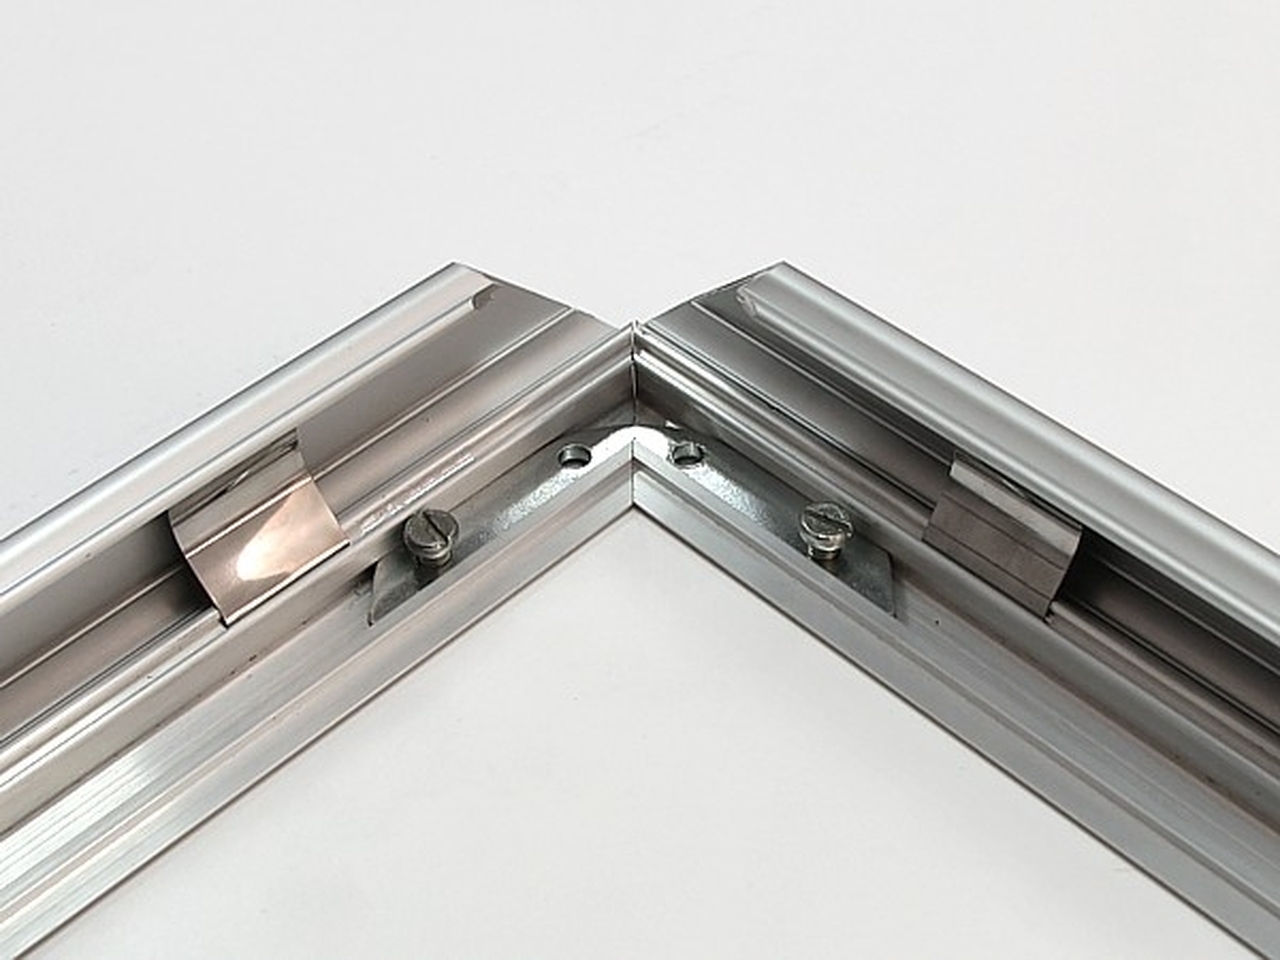 People Stopper Double Frame, A board din profil aluminiu click  32mm cu colt la 45 grade A1, JJ DISPLAYS, 594 x 841 mm